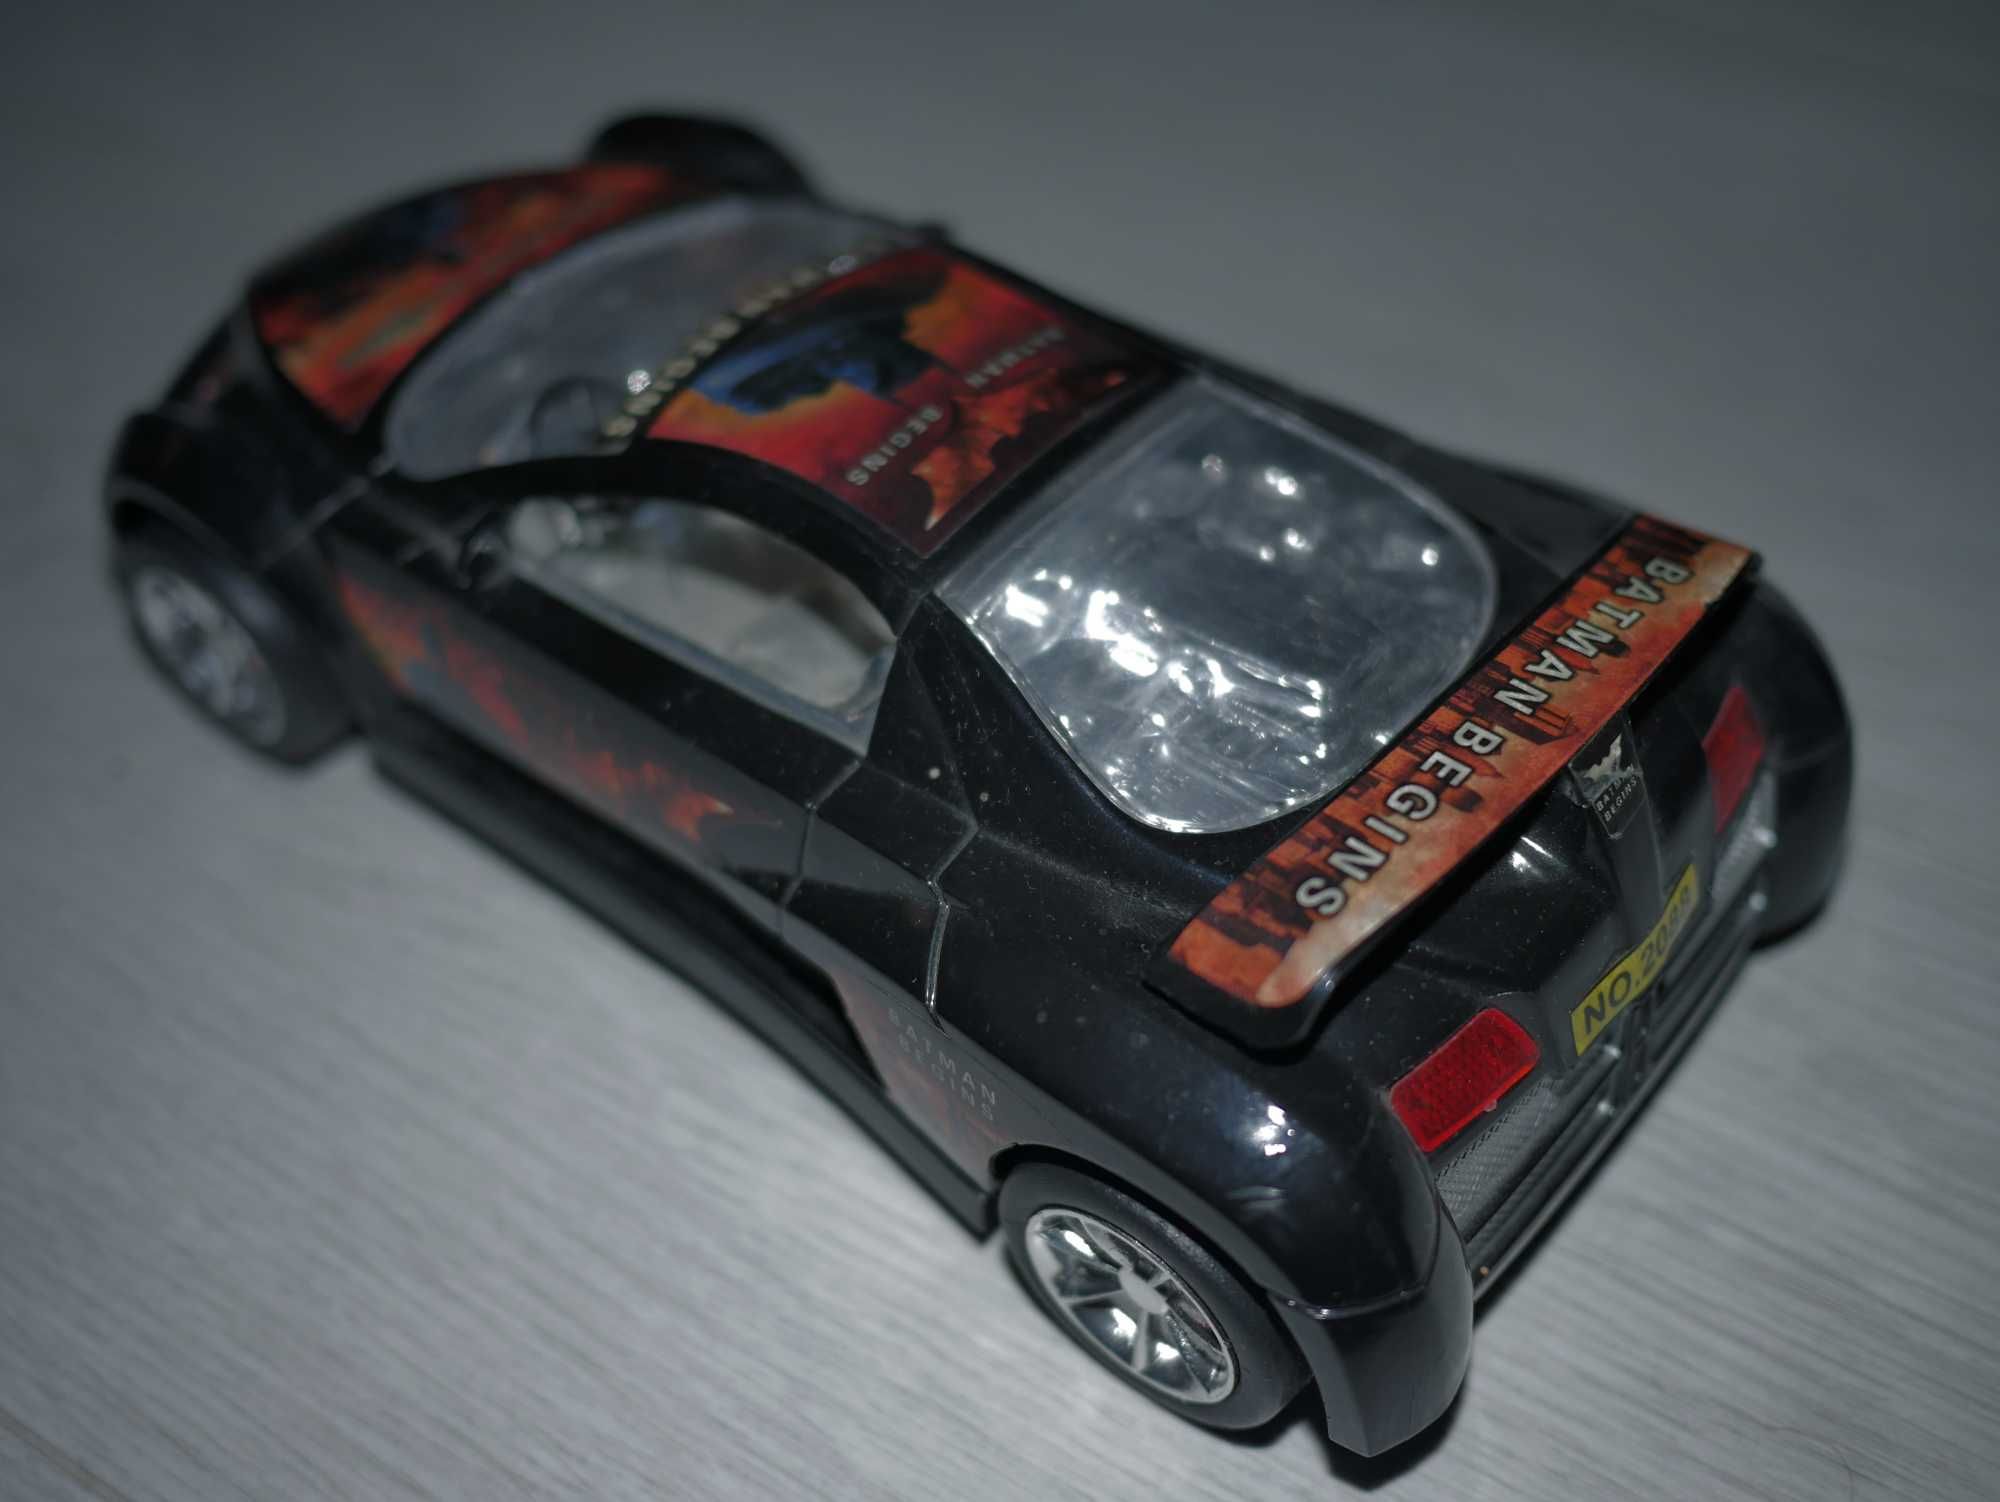 Batman Begins samochodzik | Zabawka